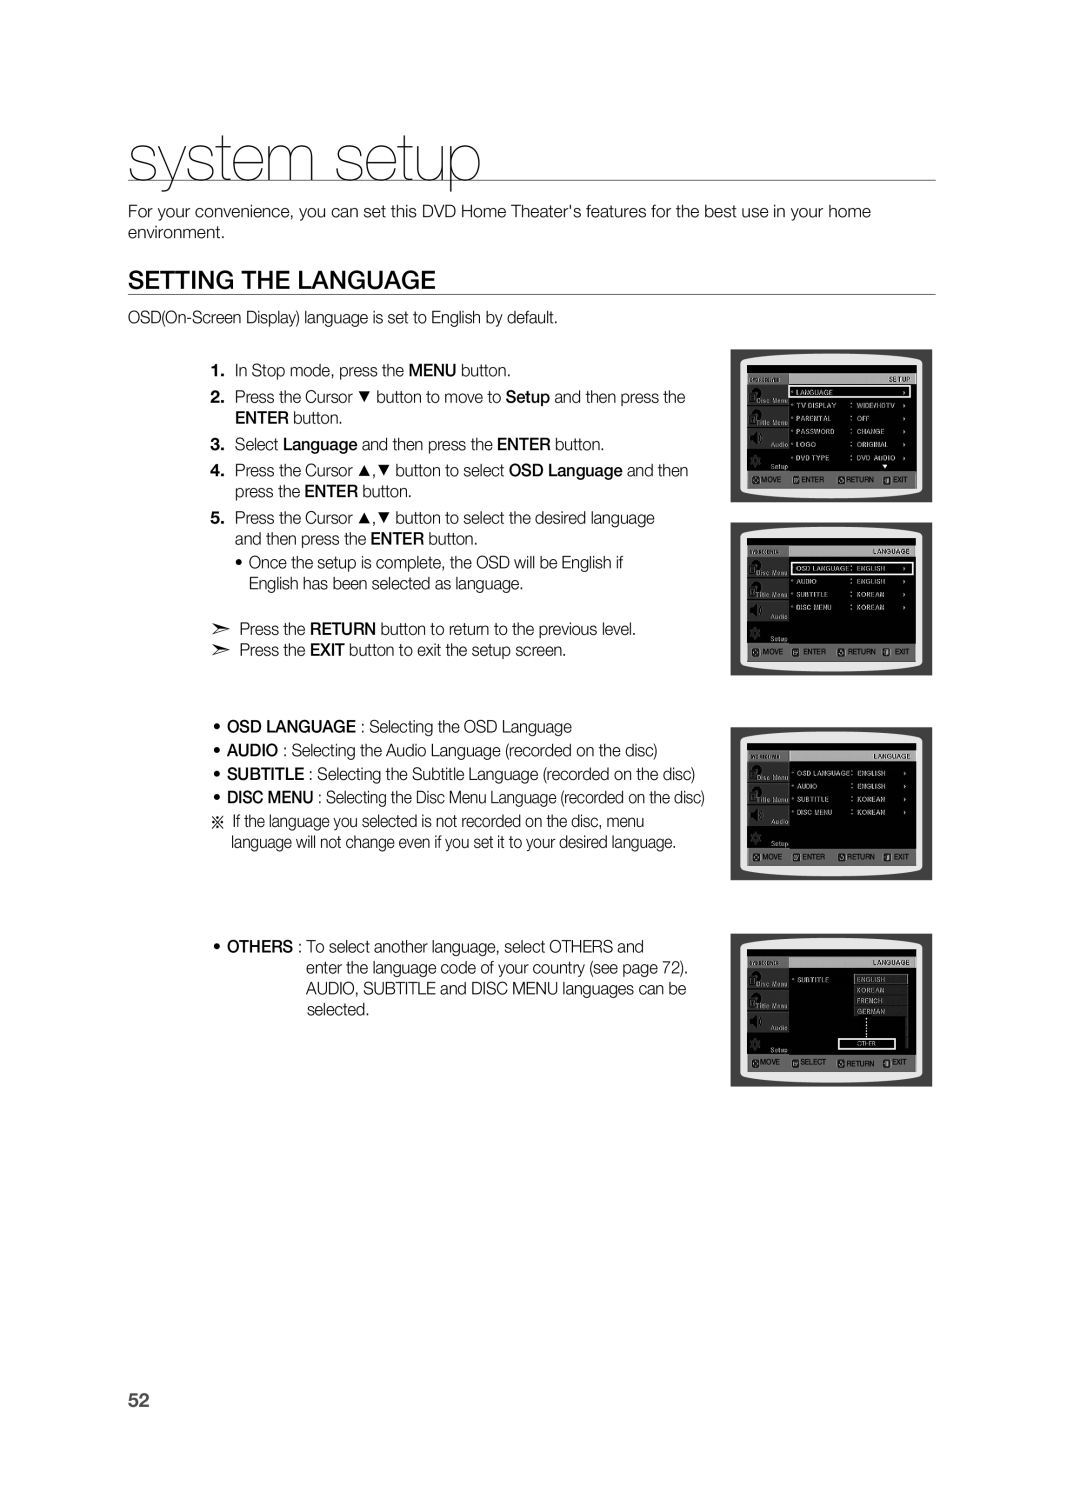 Samsung HT-TZ515 user manual system setup, Setting the Language 